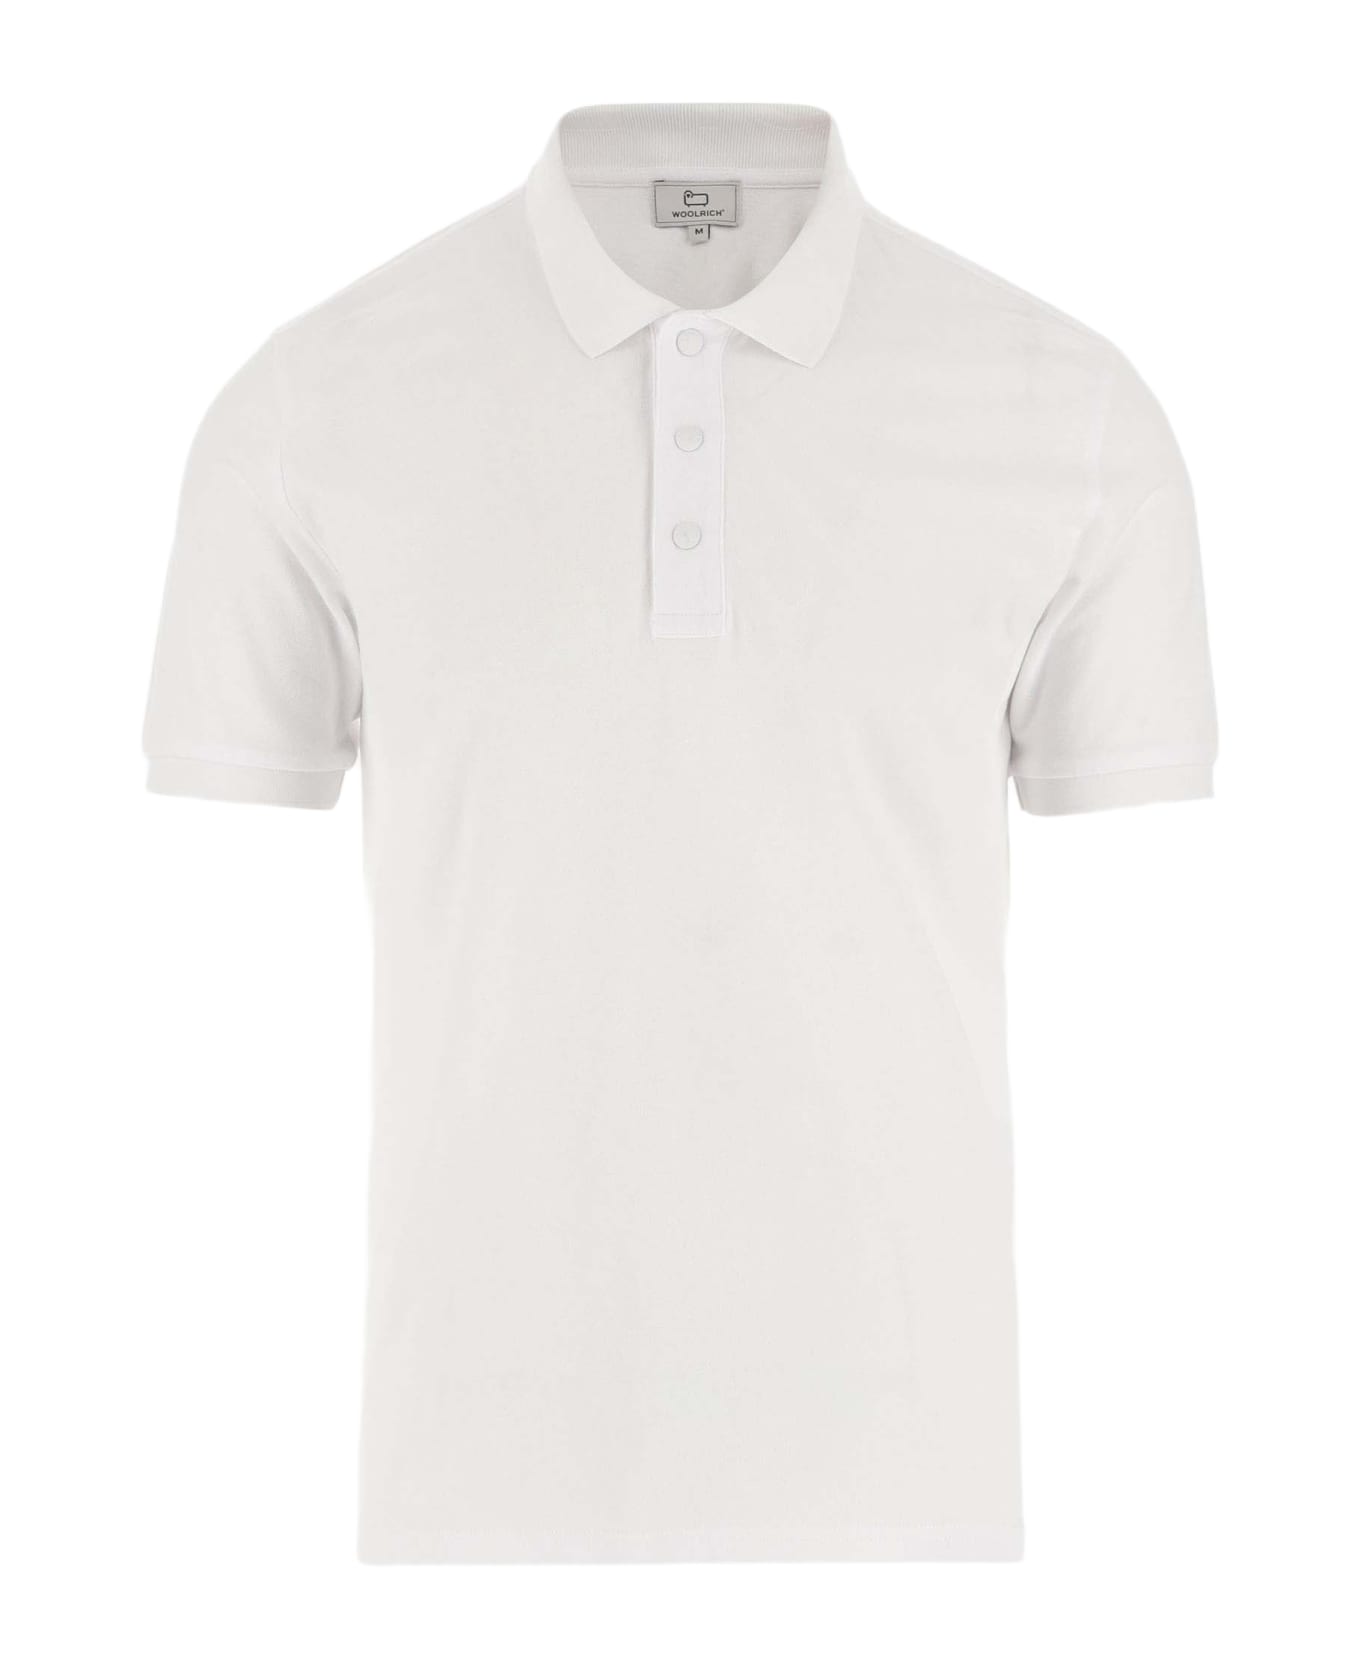 Woolrich Stretch Cotton Polo Shirt - White